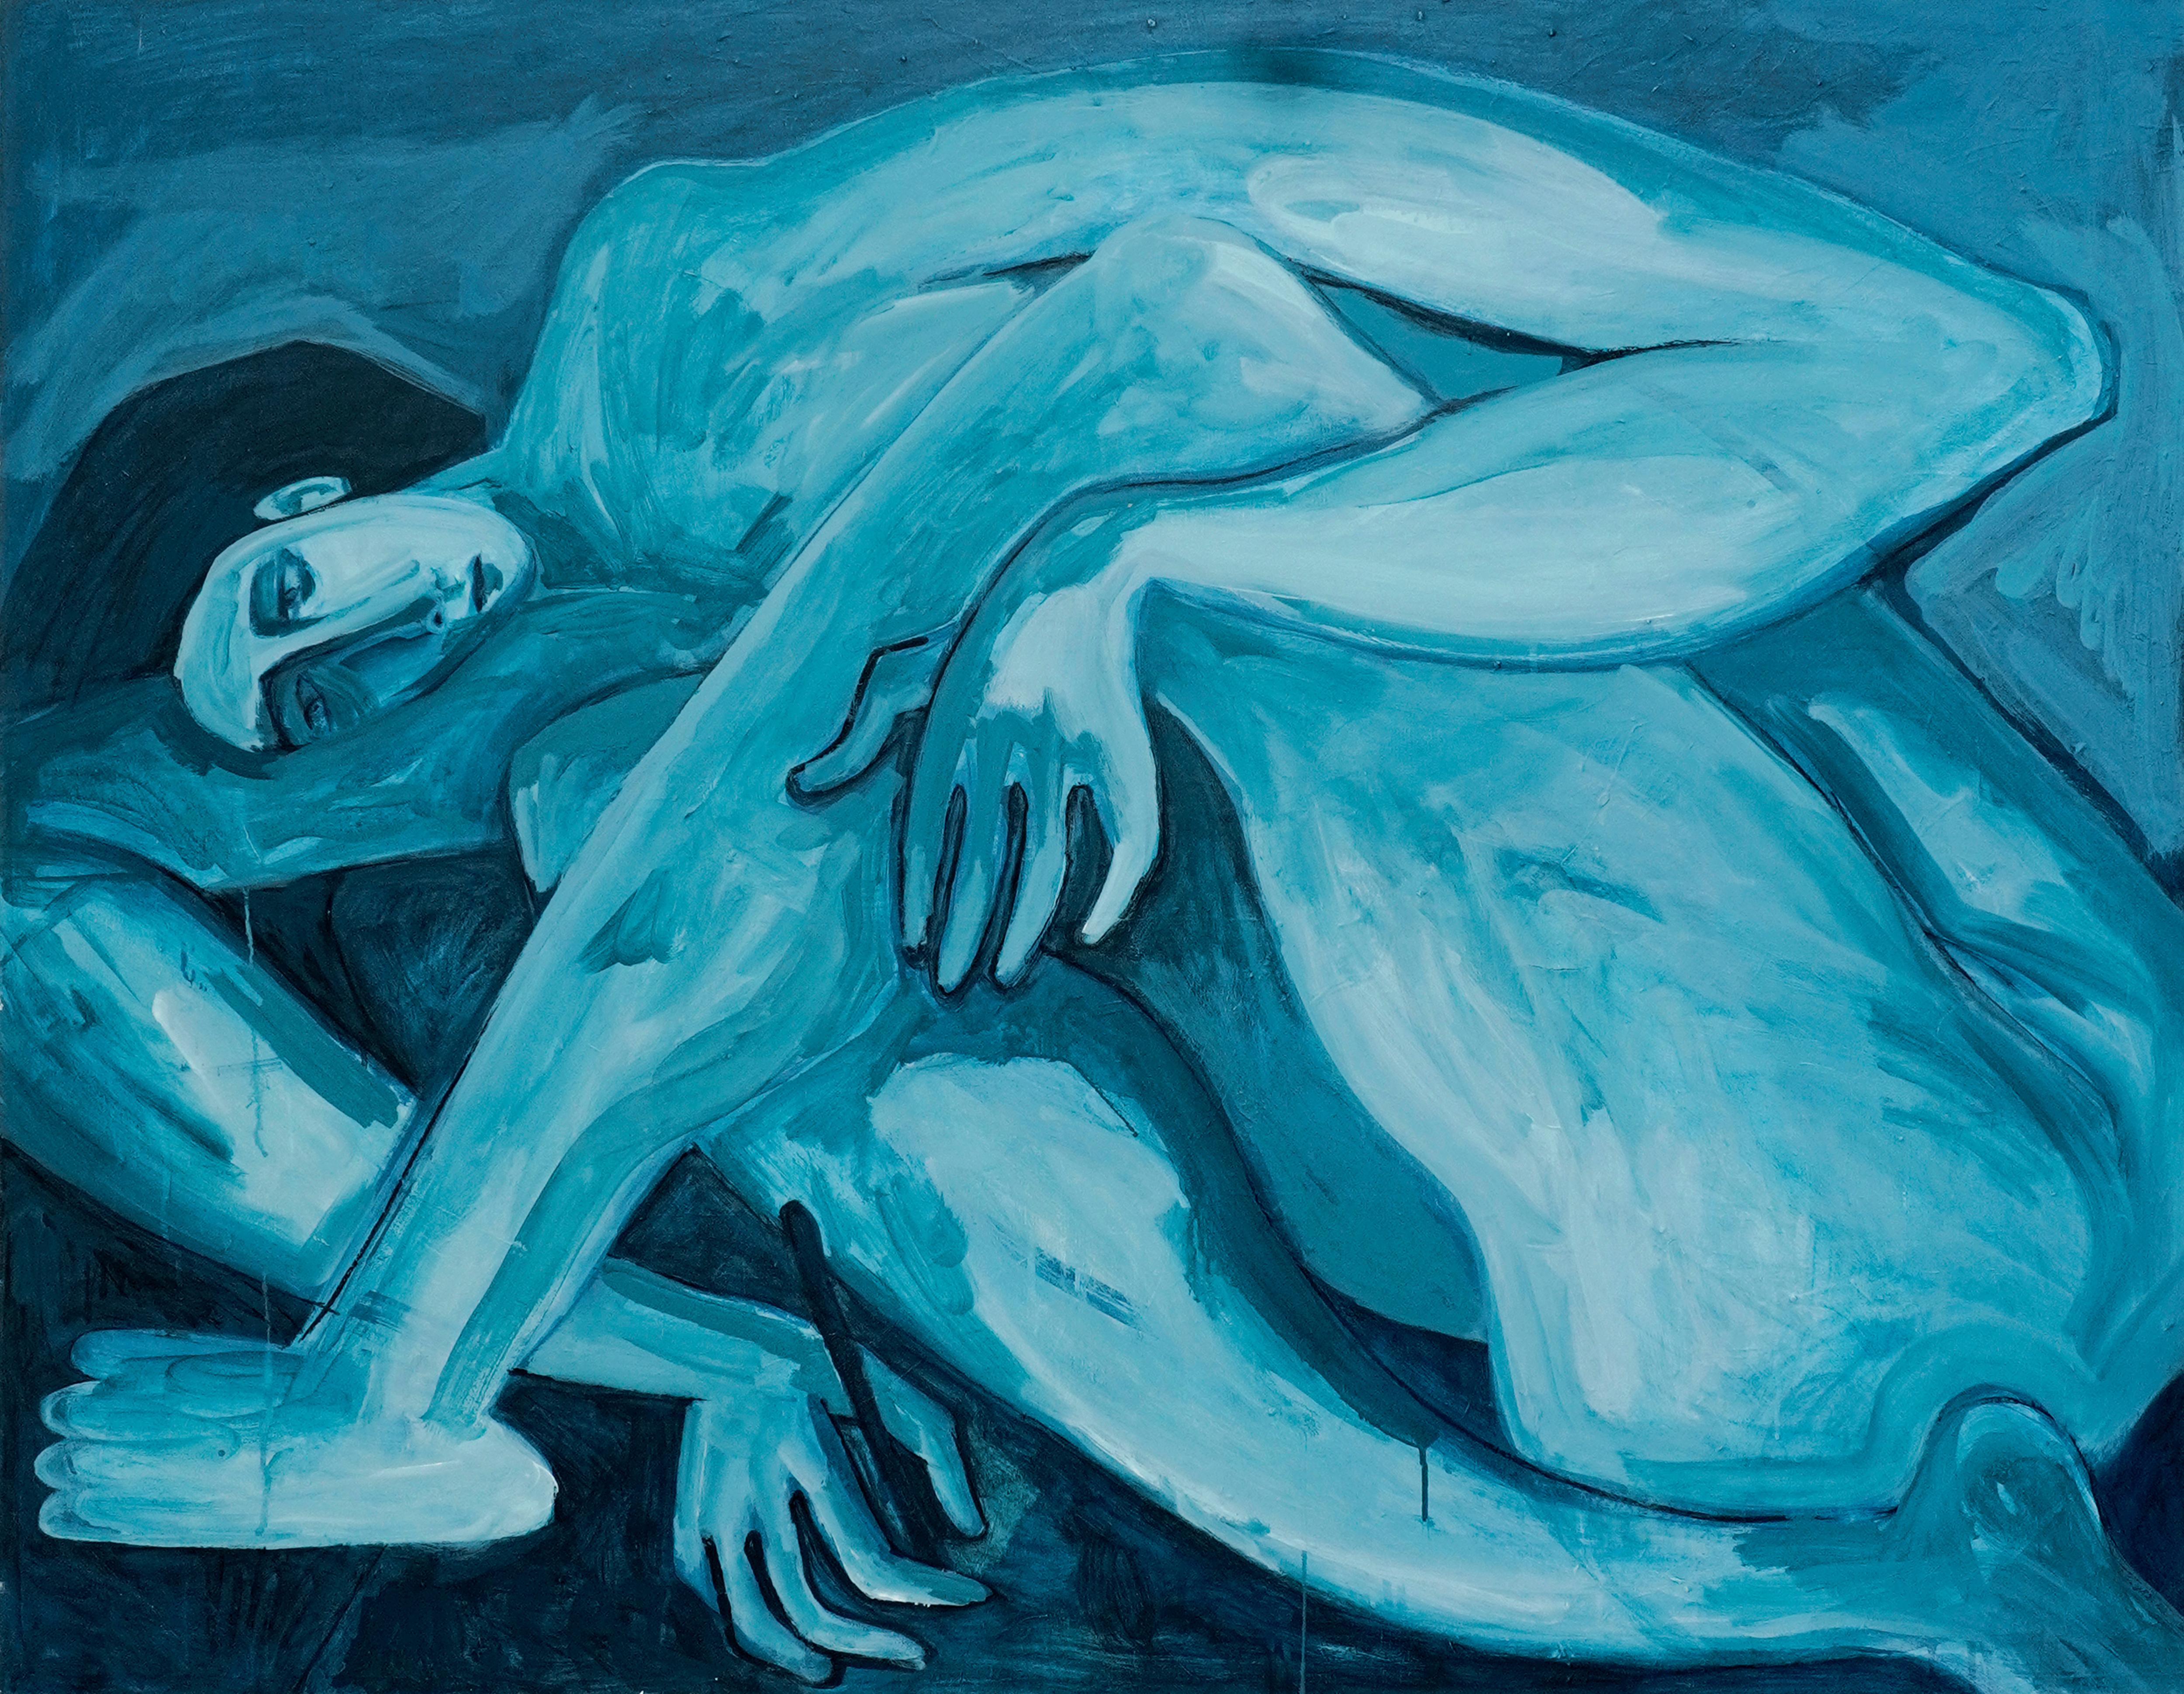 Cuidado! Las ideas son ladronas de sueños, abstract blue dream-like painting - Painting by Magdalena Paz